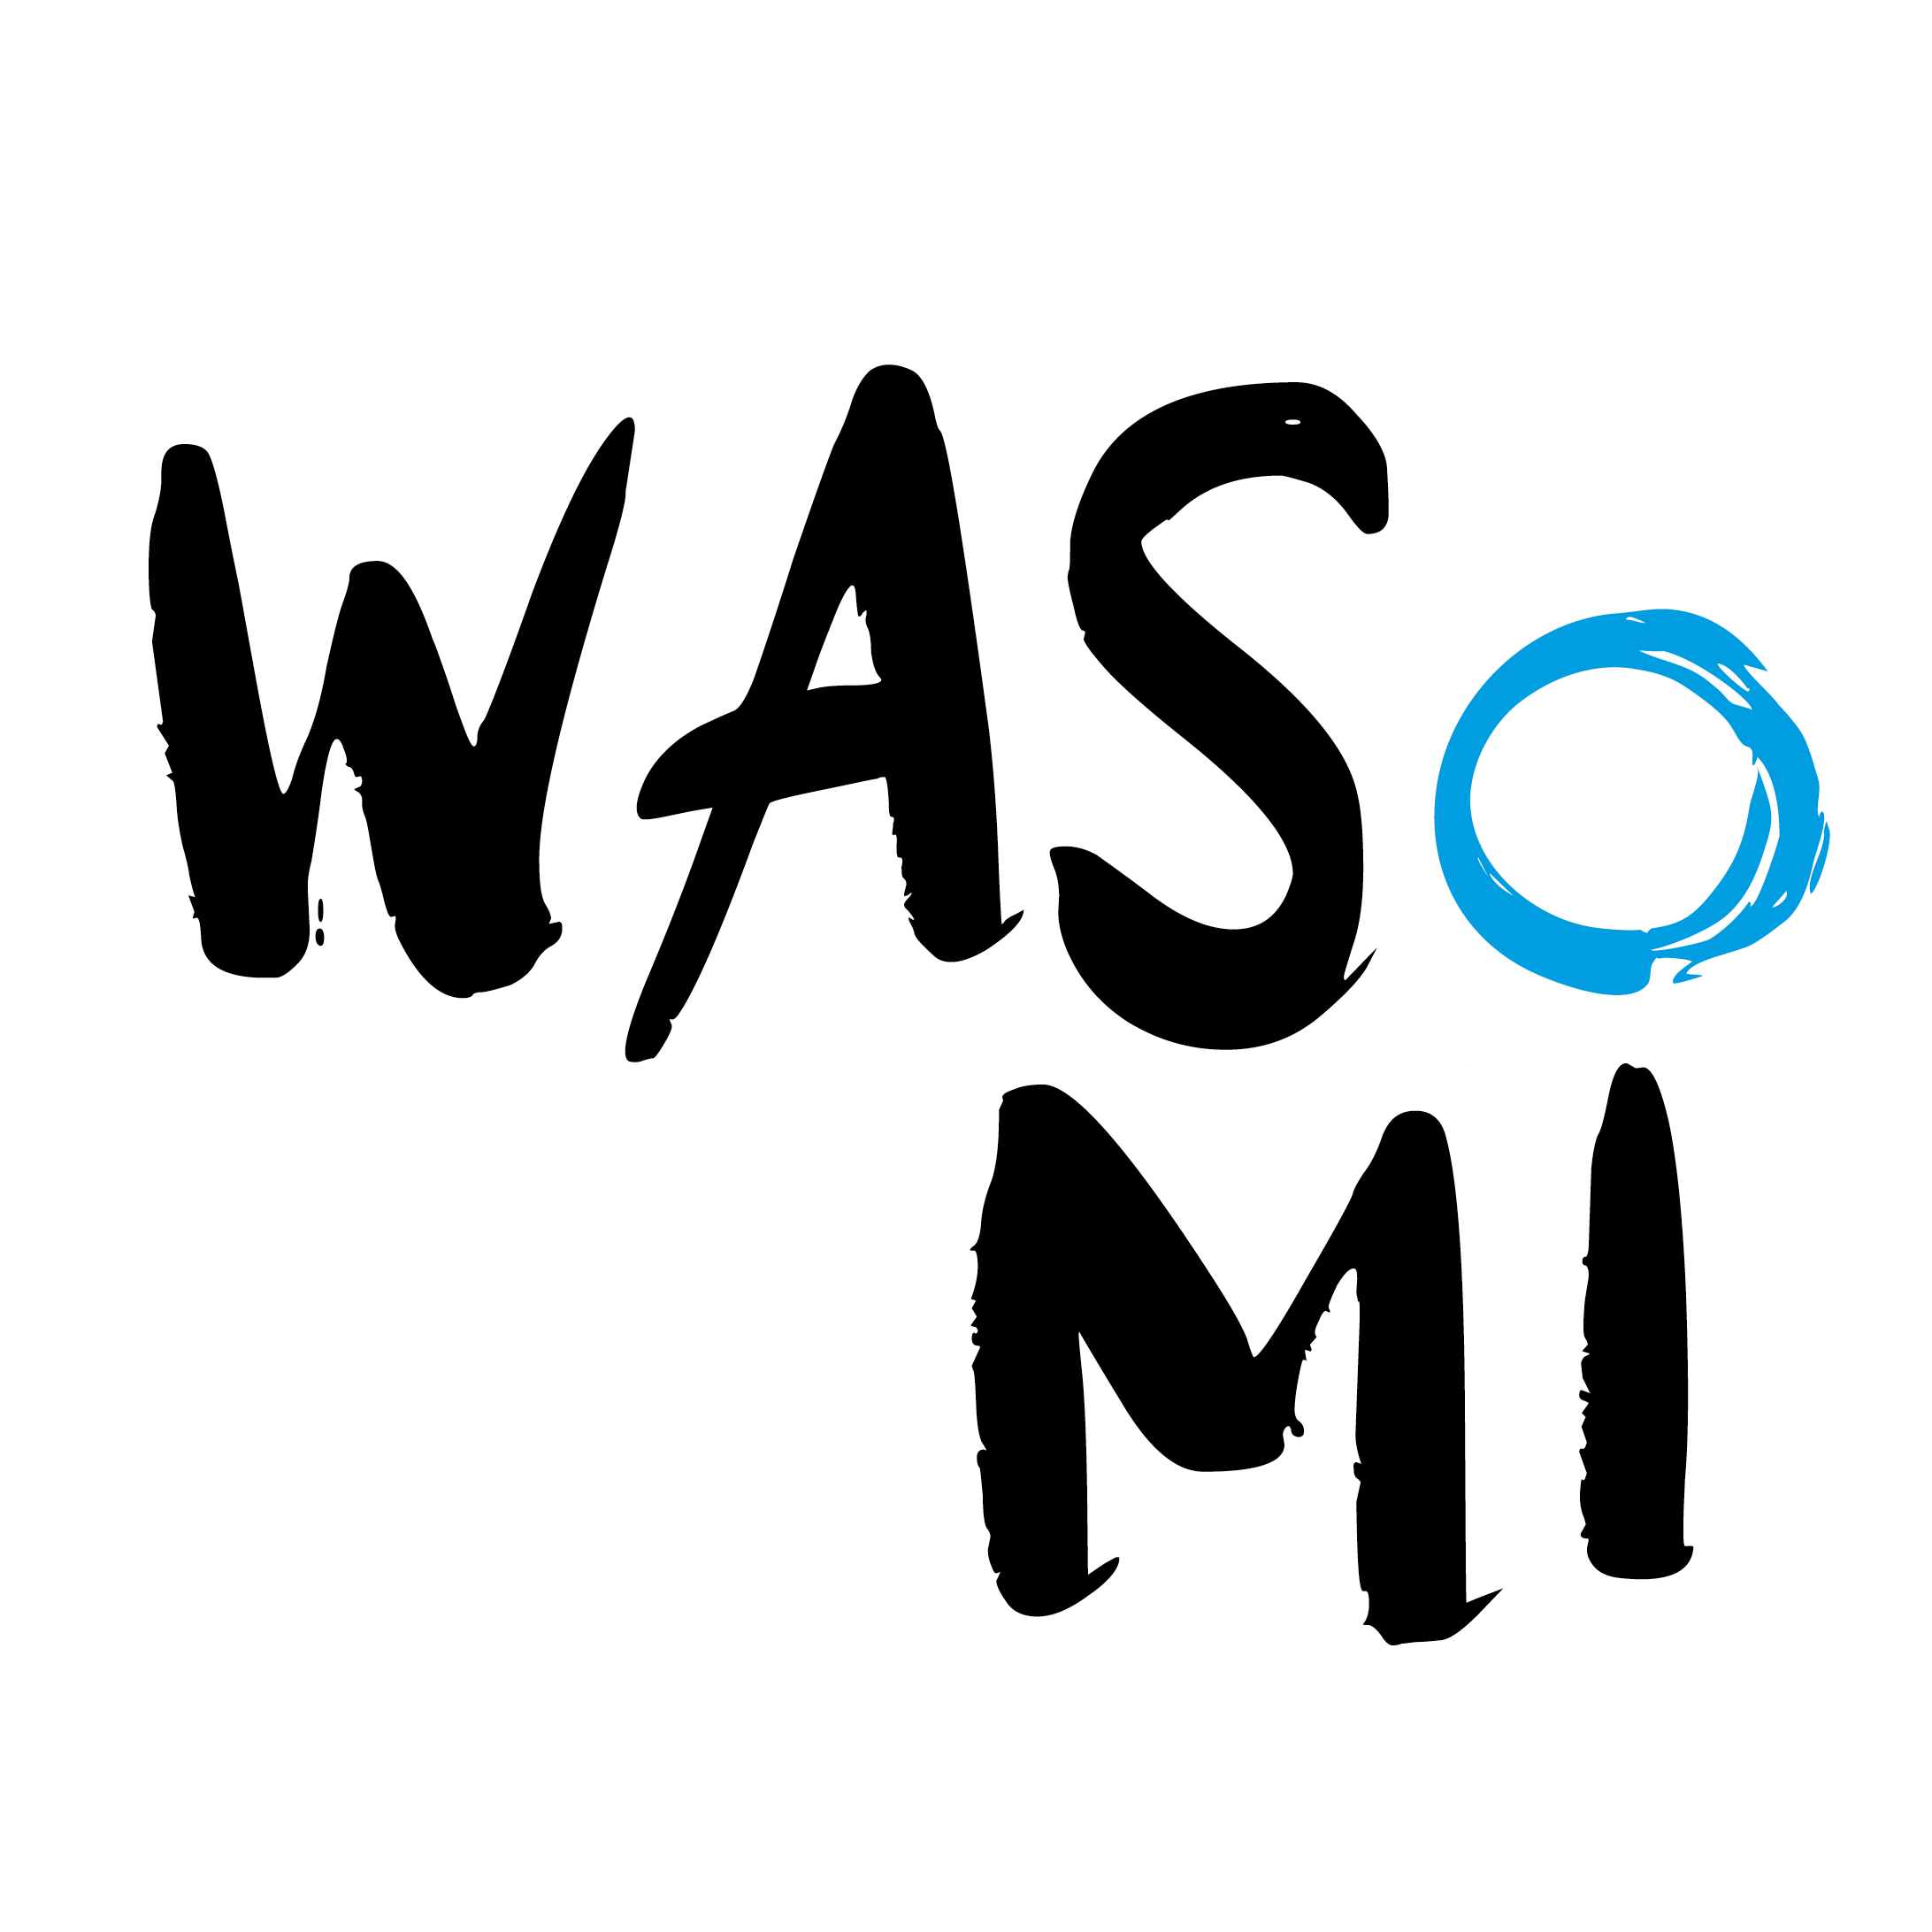 Team WASoMI and WASoMI Lab